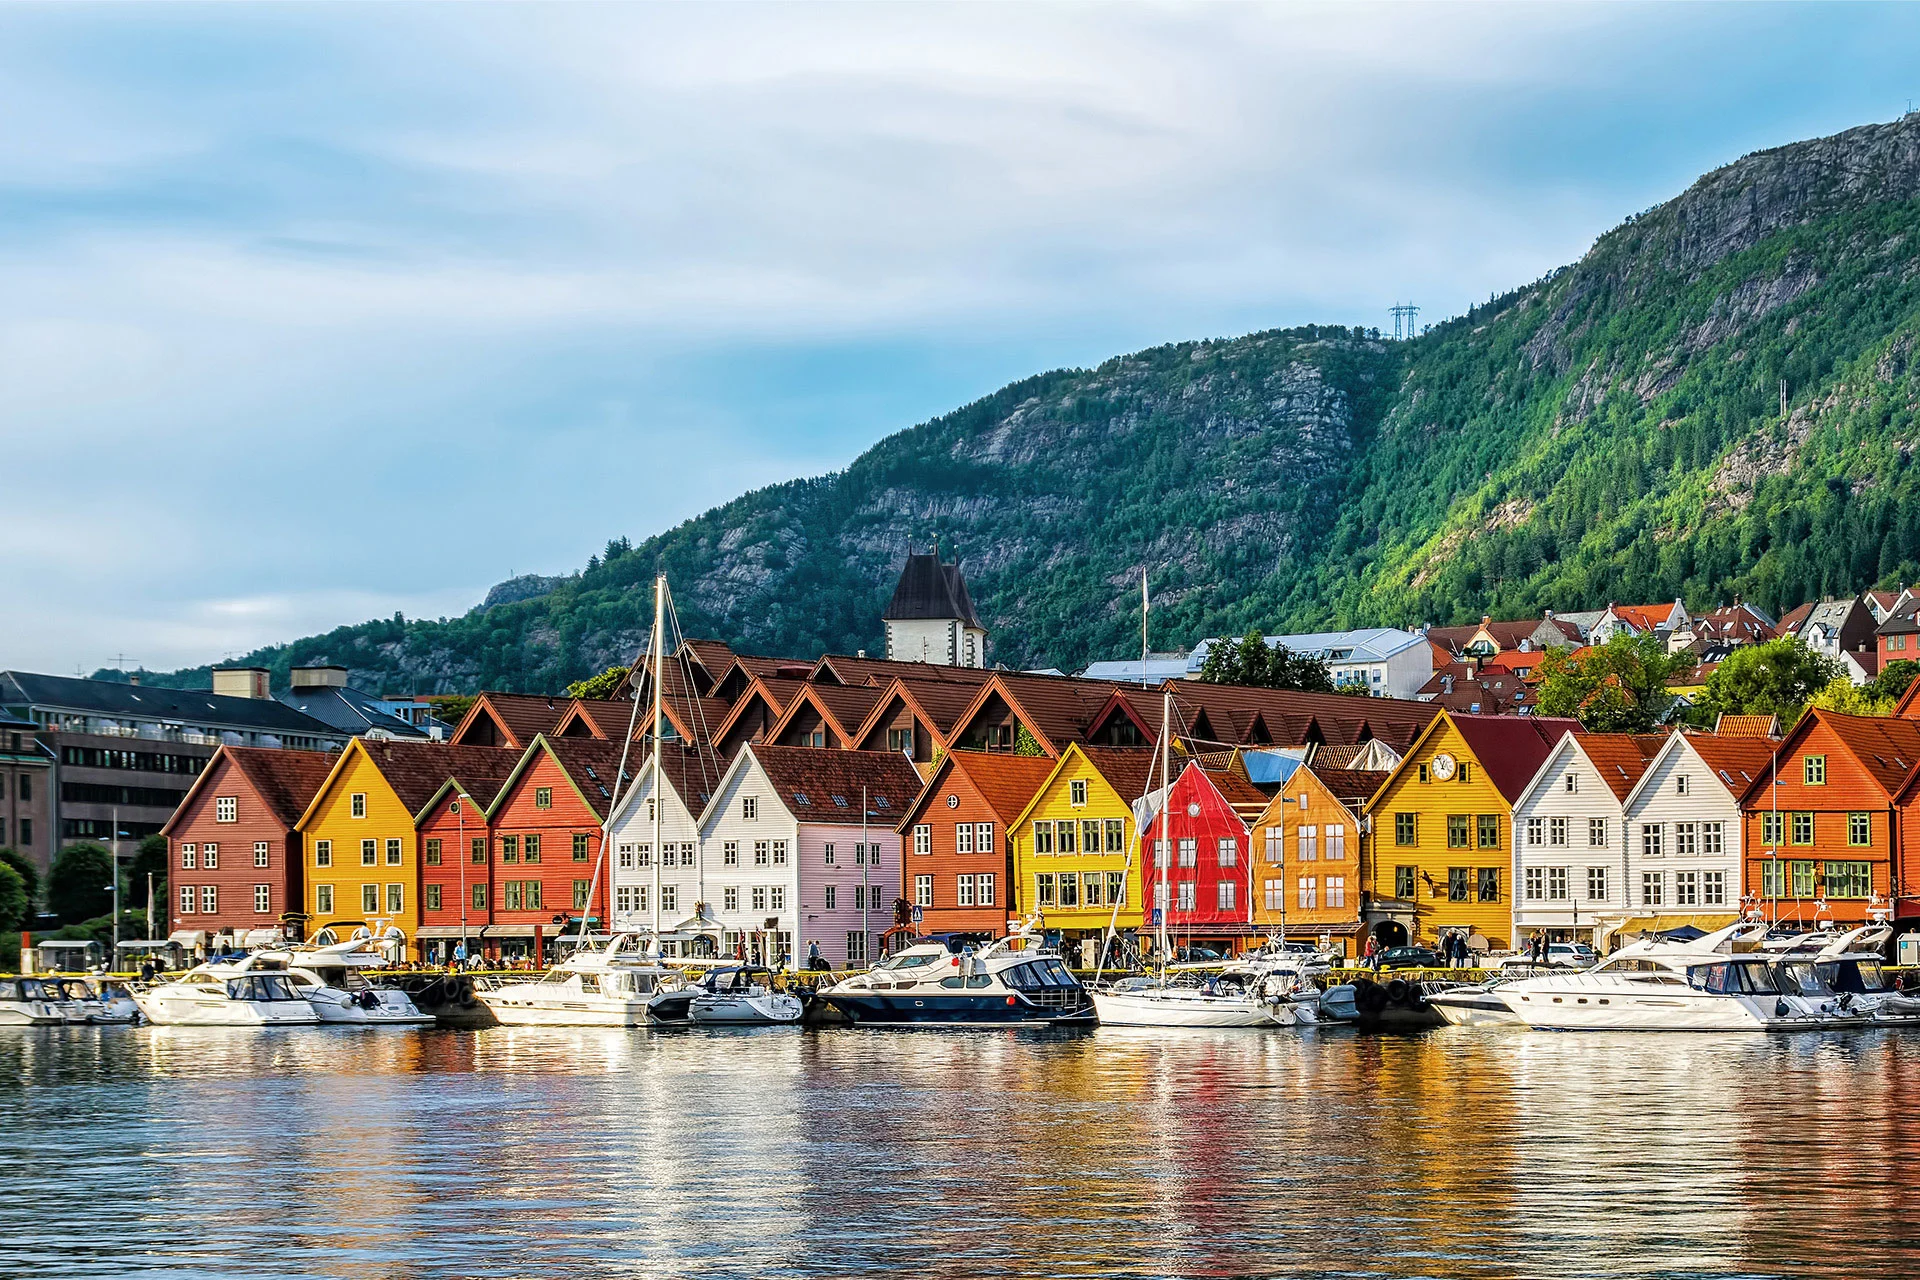 The colorful wooden wharfs in Bryggen, Bergen